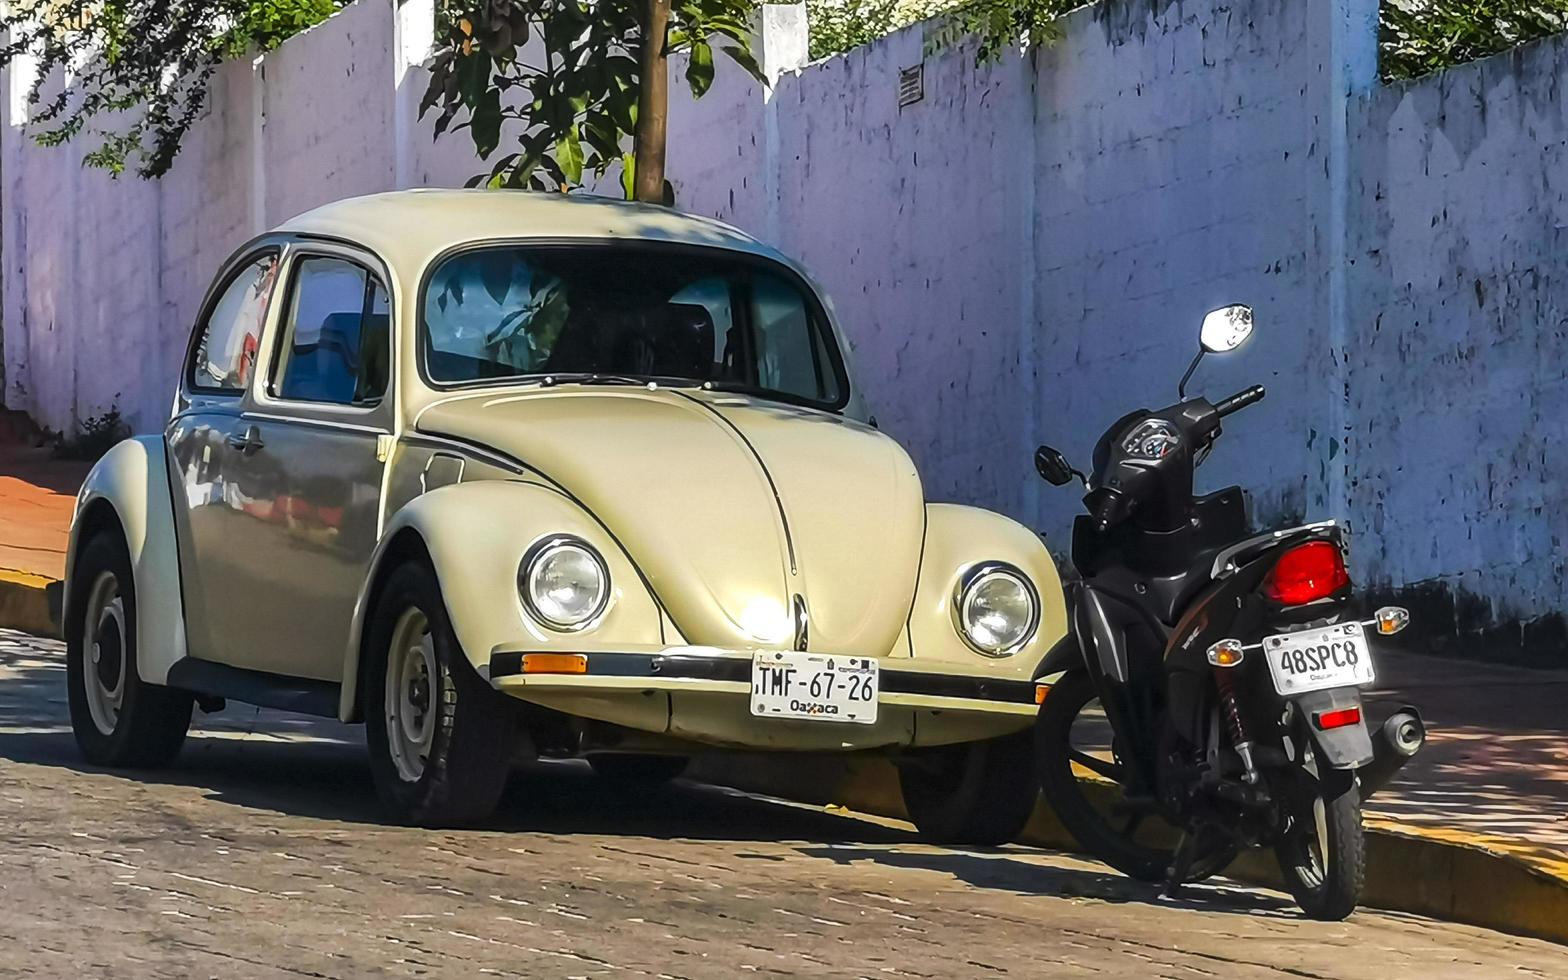 puerto escondido oaxaca mexico 2022 varios autos tuneados coloridos y autos clasicos antiguos mexico. foto